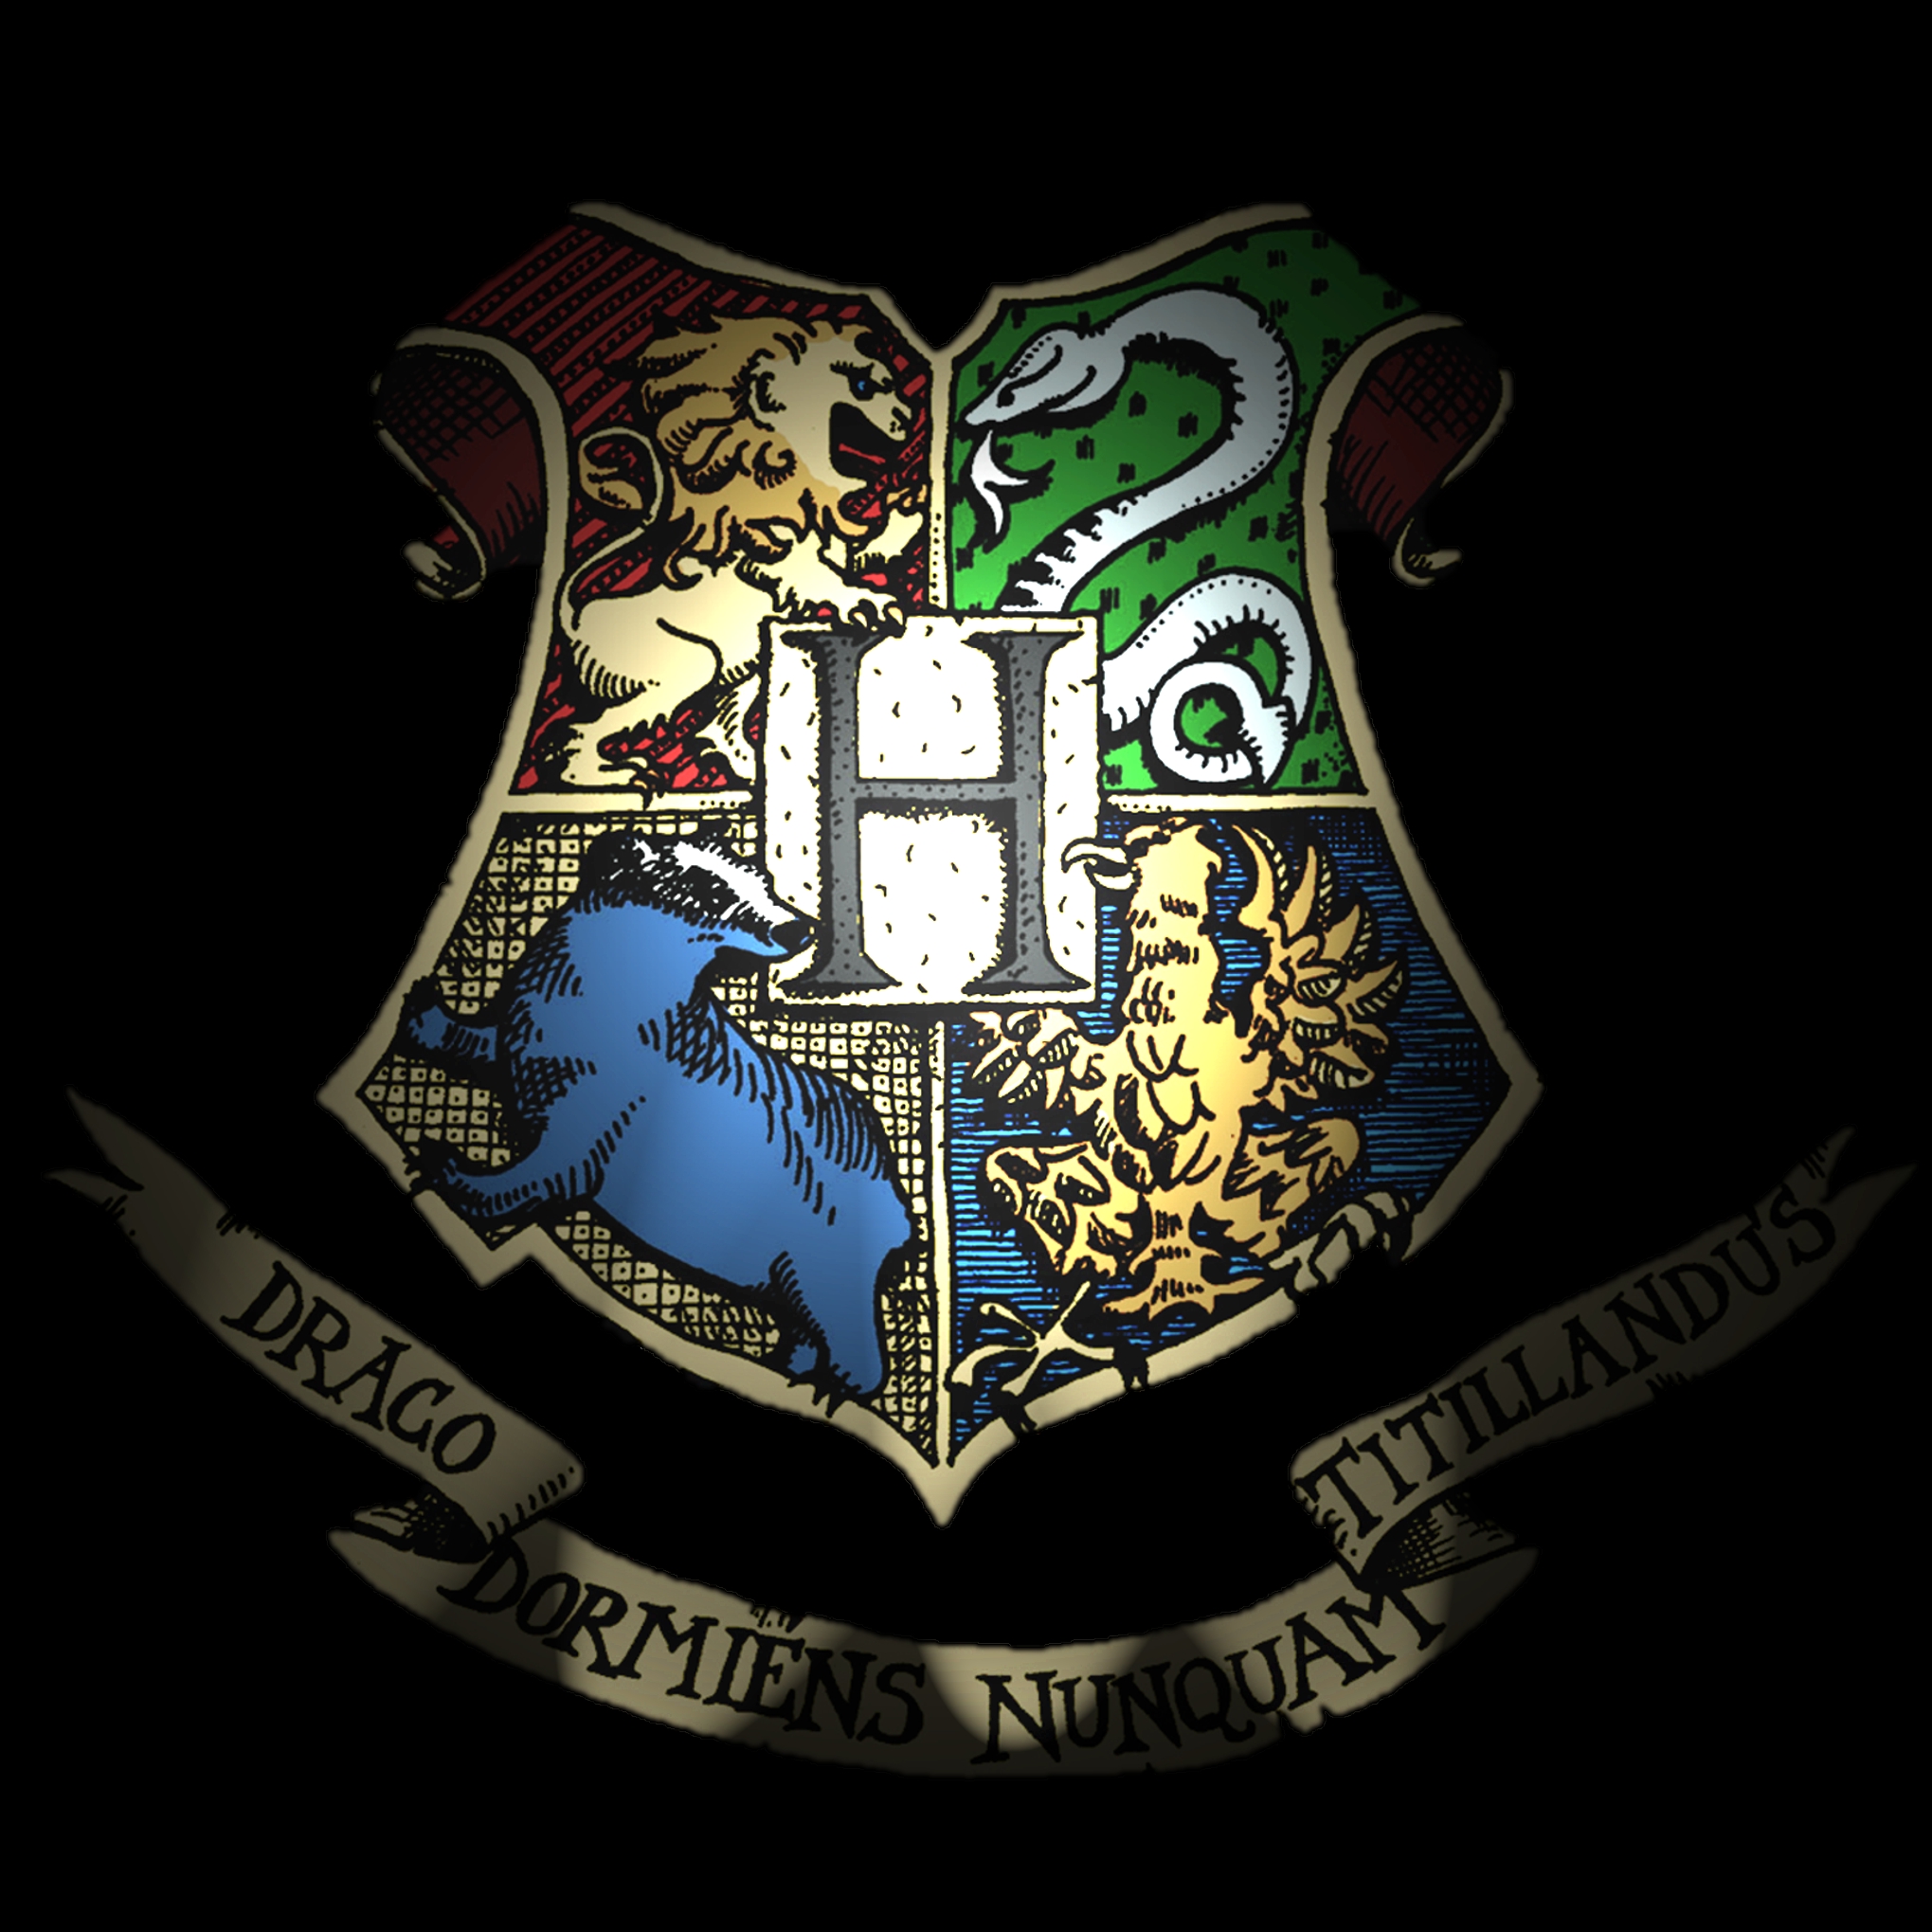 Harry Potter Hogwarts Crest Wallpaper Harry potter fans can now